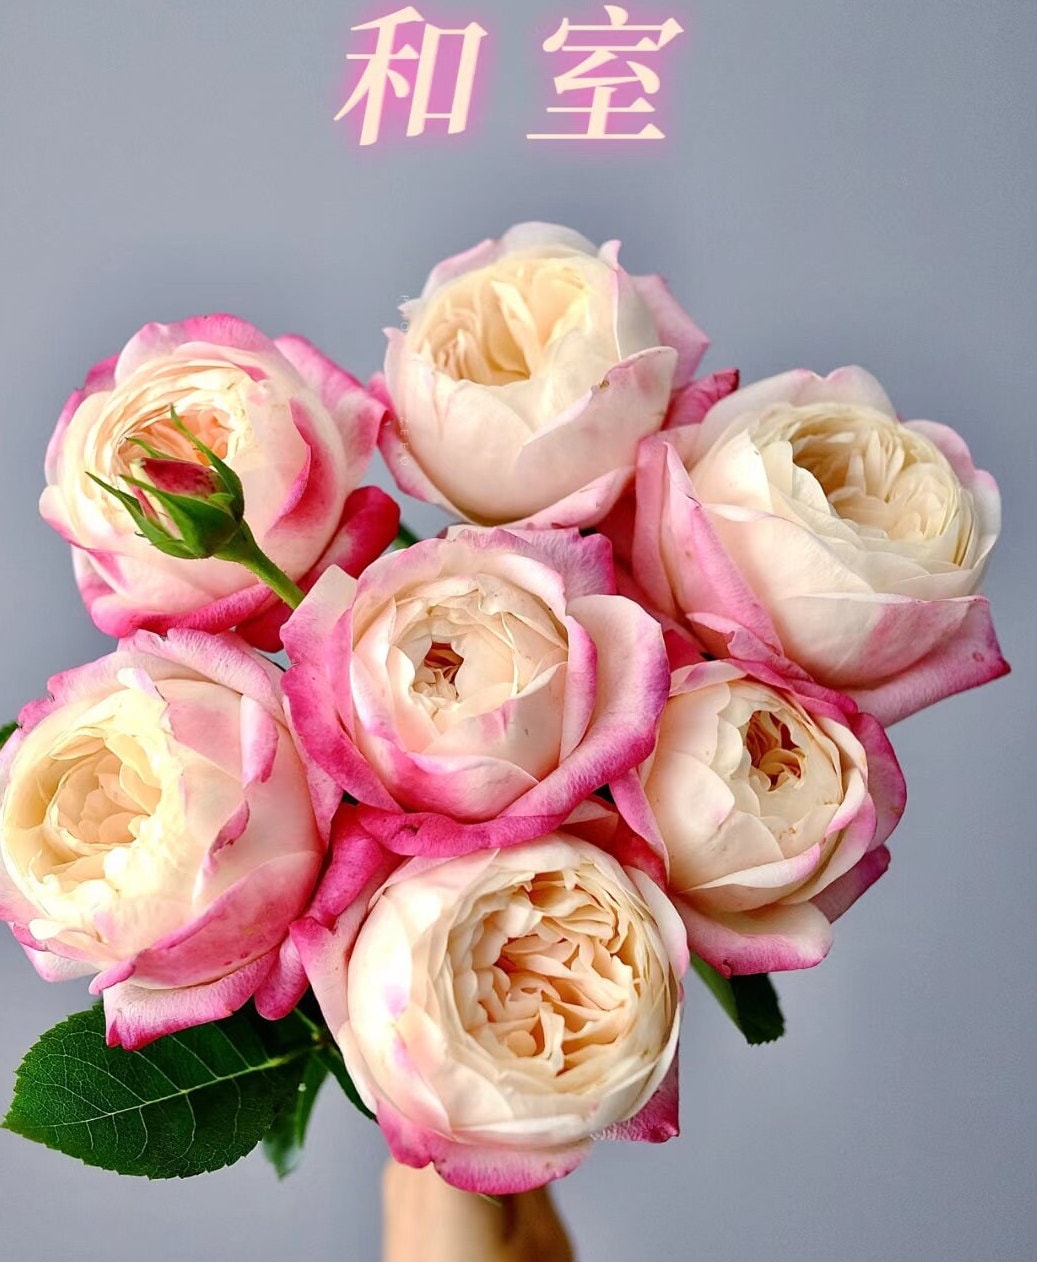 Japanese Rose Washitsu / Heshi (和室) (1 Gal+ Live Plant) Shrub Rose